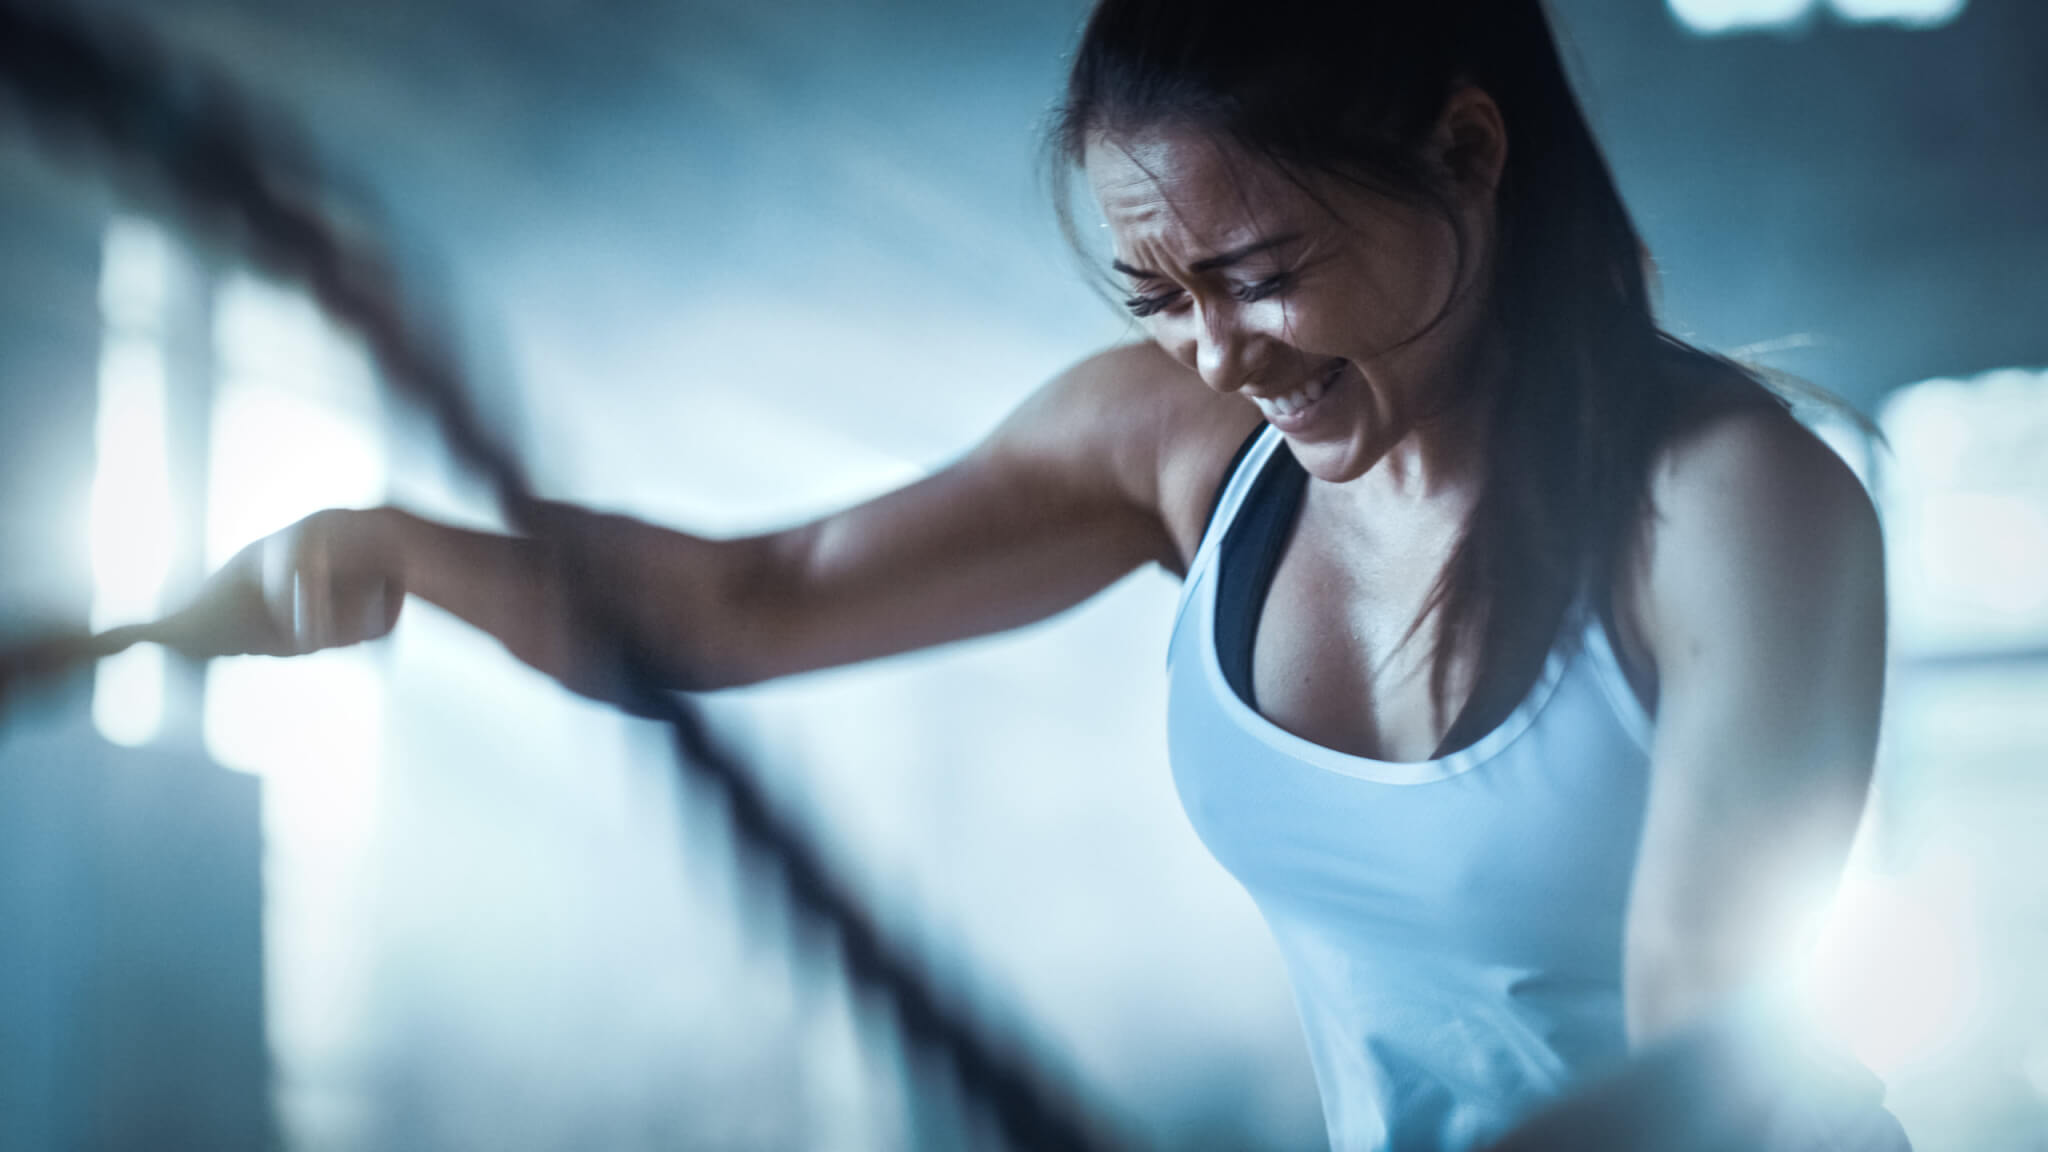 Woman having vigorous workout, strenuous exercise routine with ropes